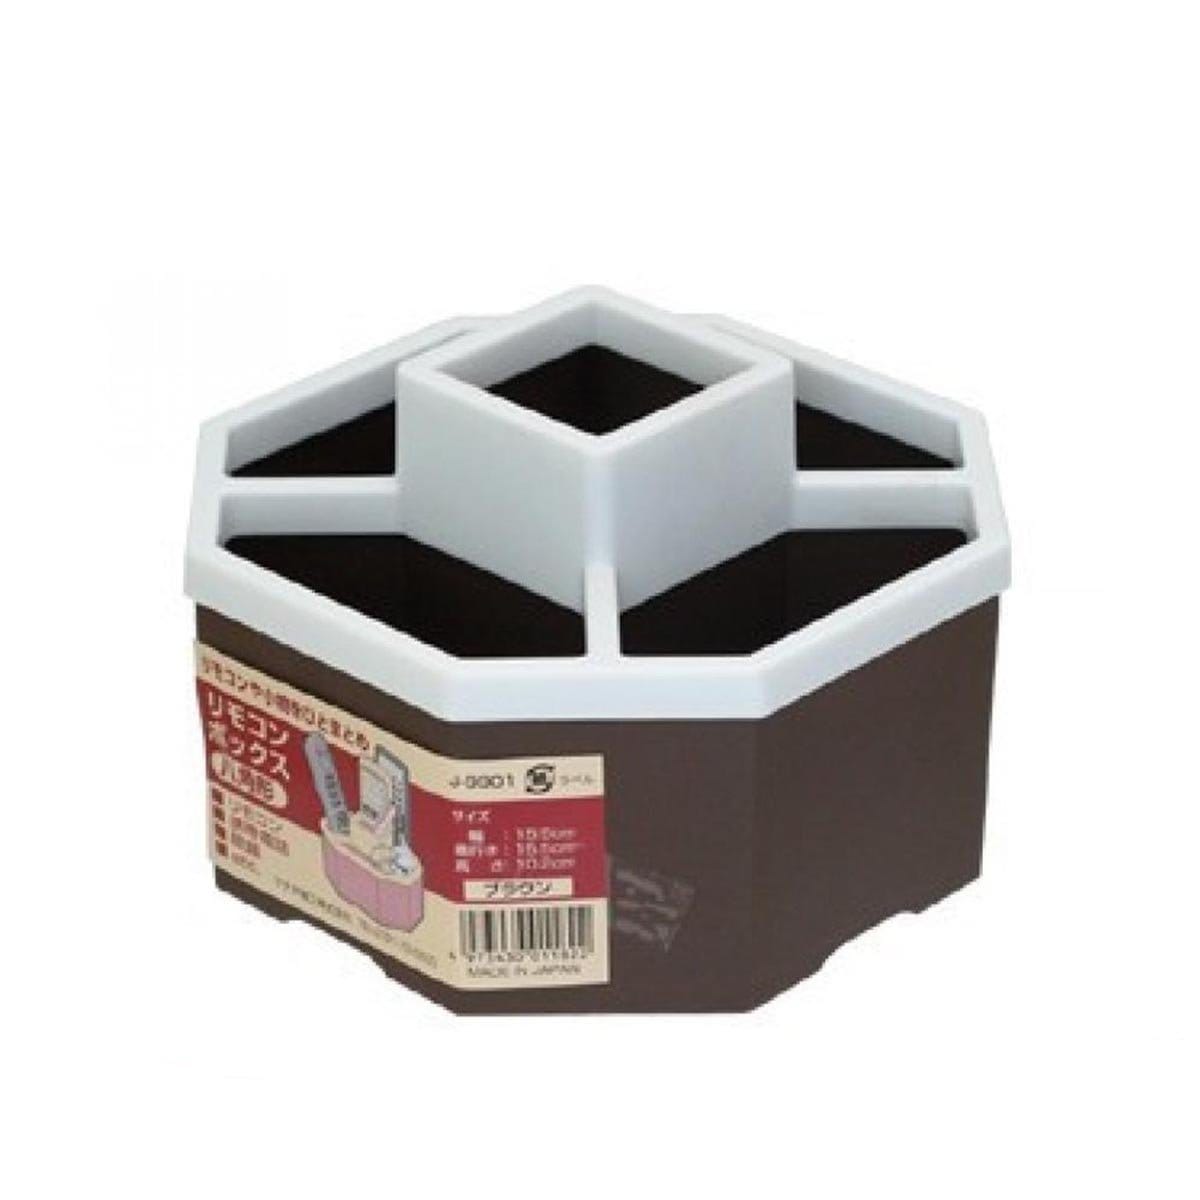 Japanese Plastic Remote Control Octagon Storage Box Brown